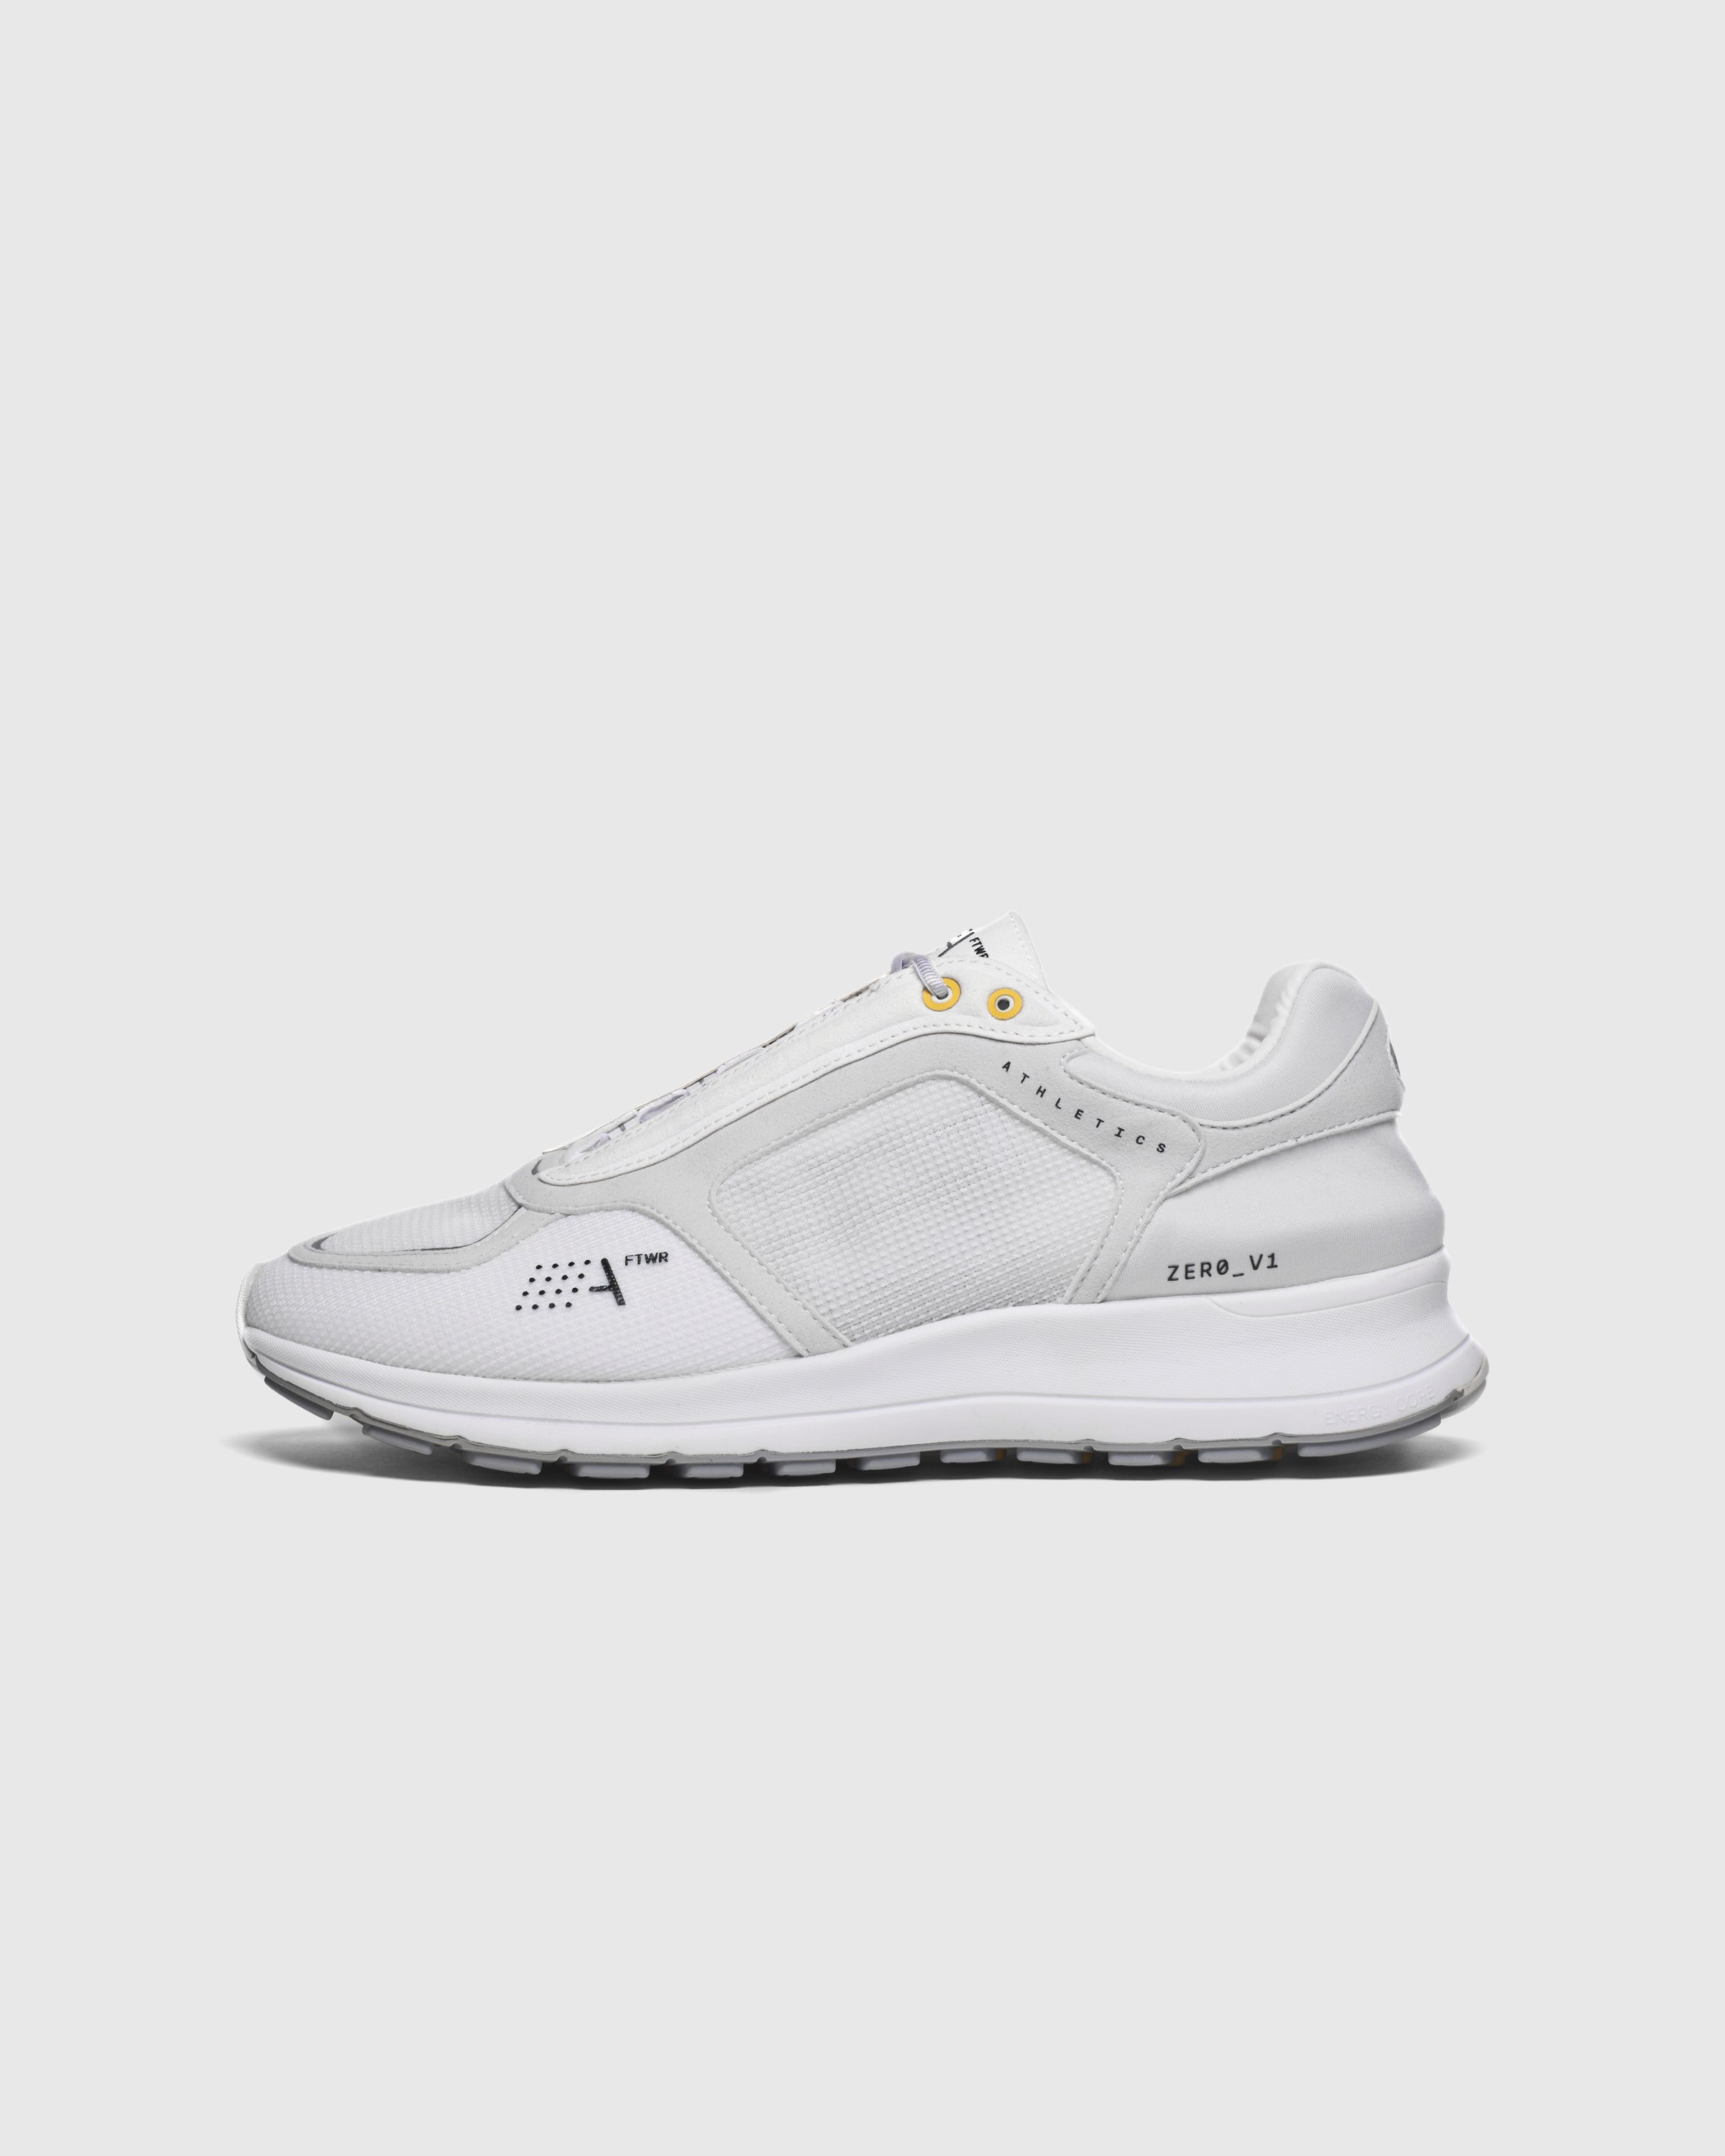 Athletics Footwear - Zero V1 White - Footwear - White - Image 2